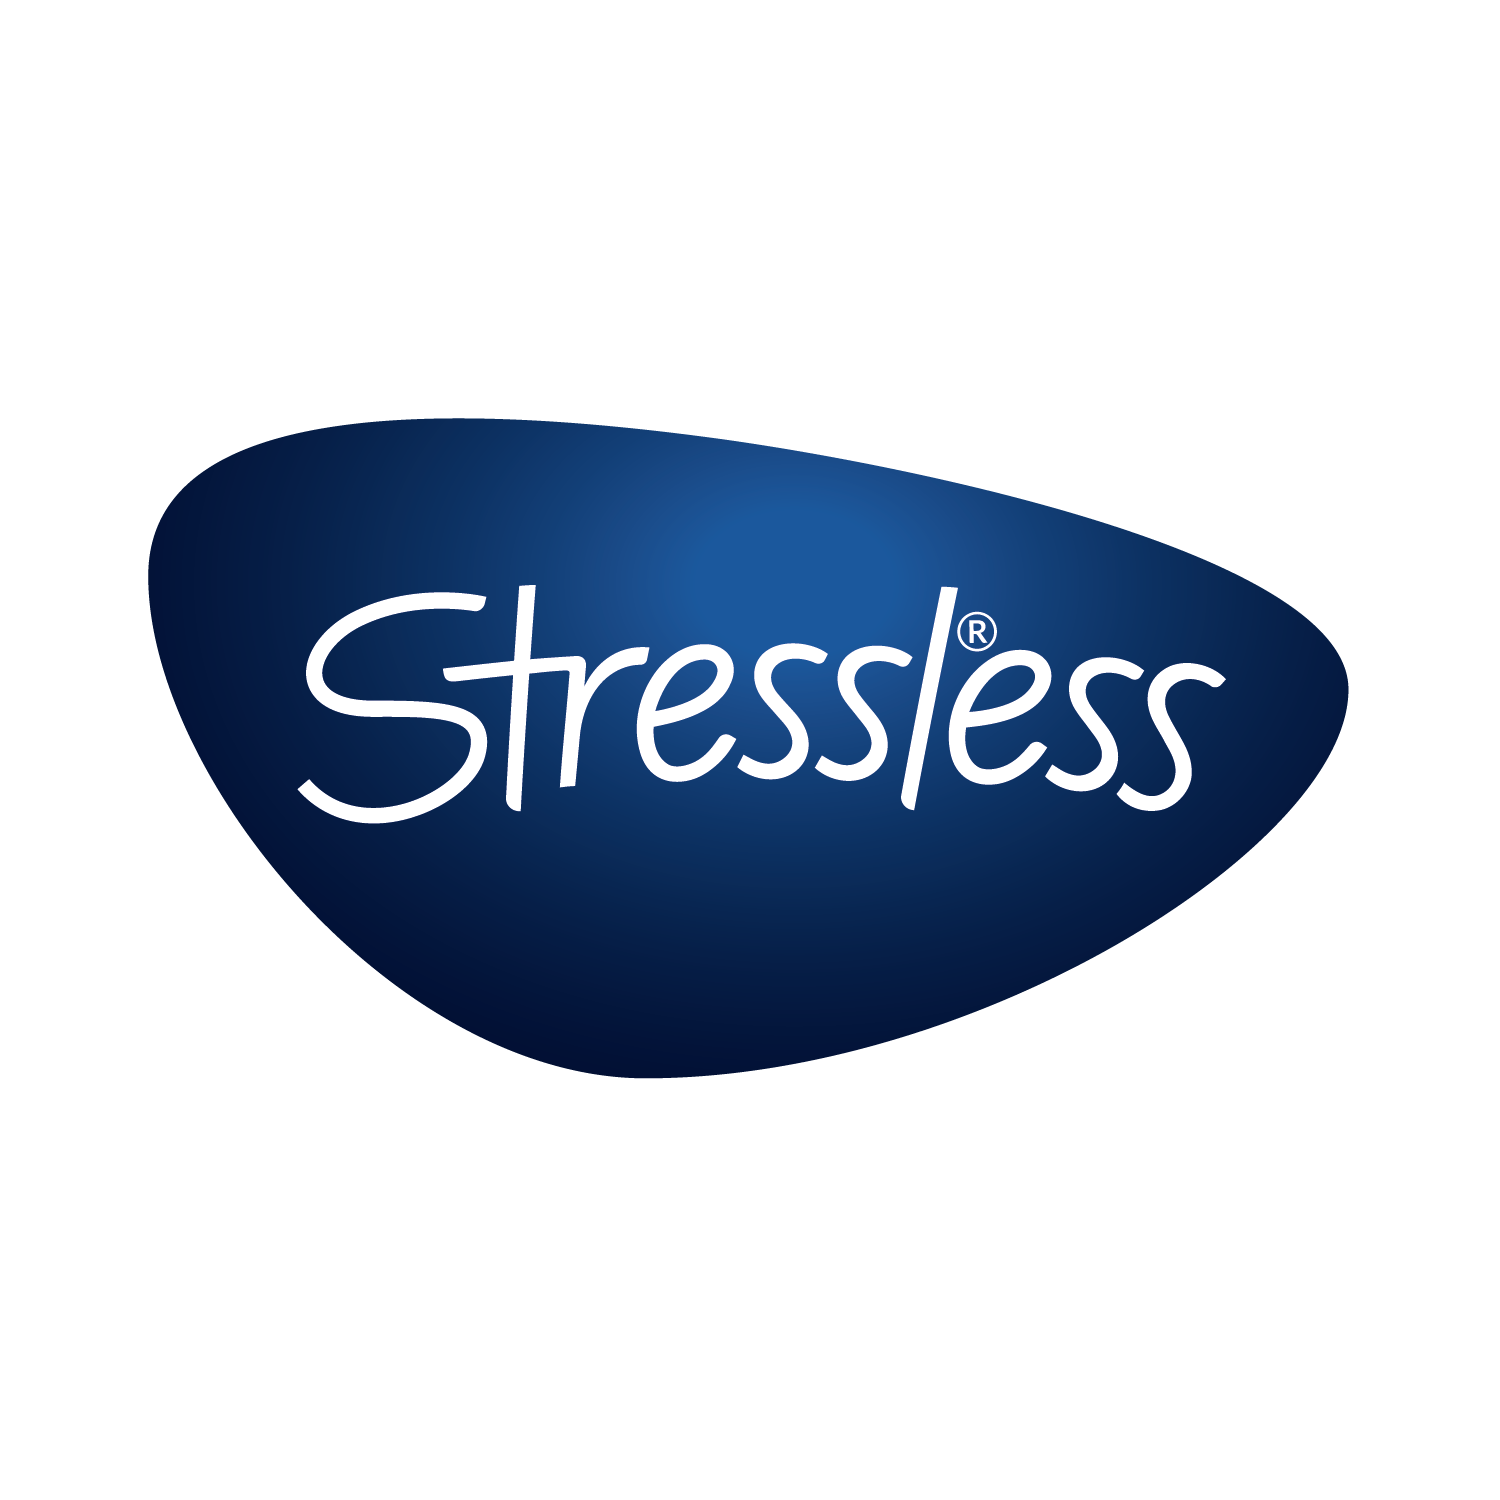 Stressless_main_logo_rgb.png